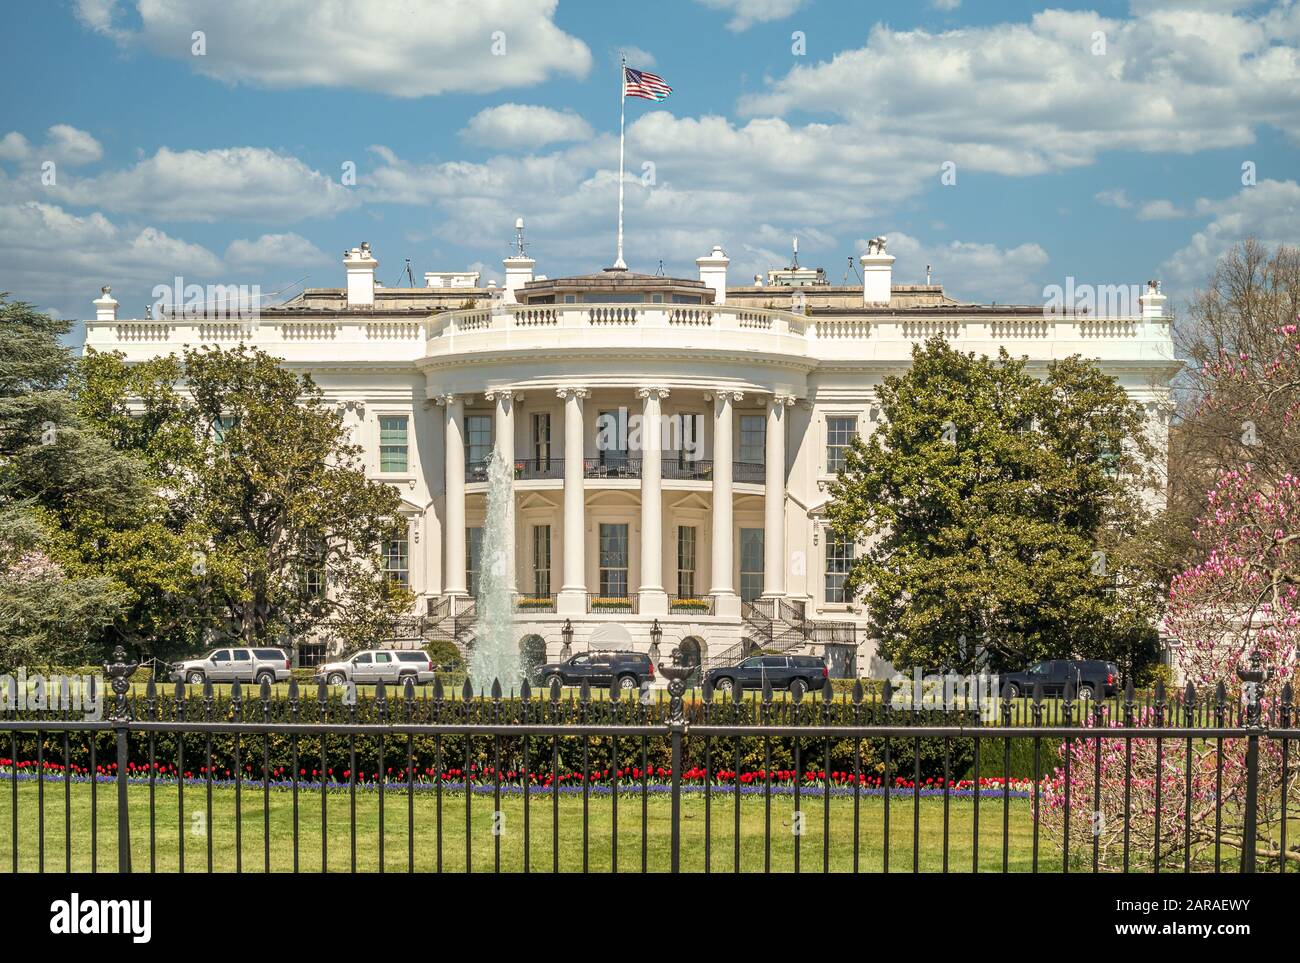 The White House South Lawn side - Washington D.C., USA Stock Photo